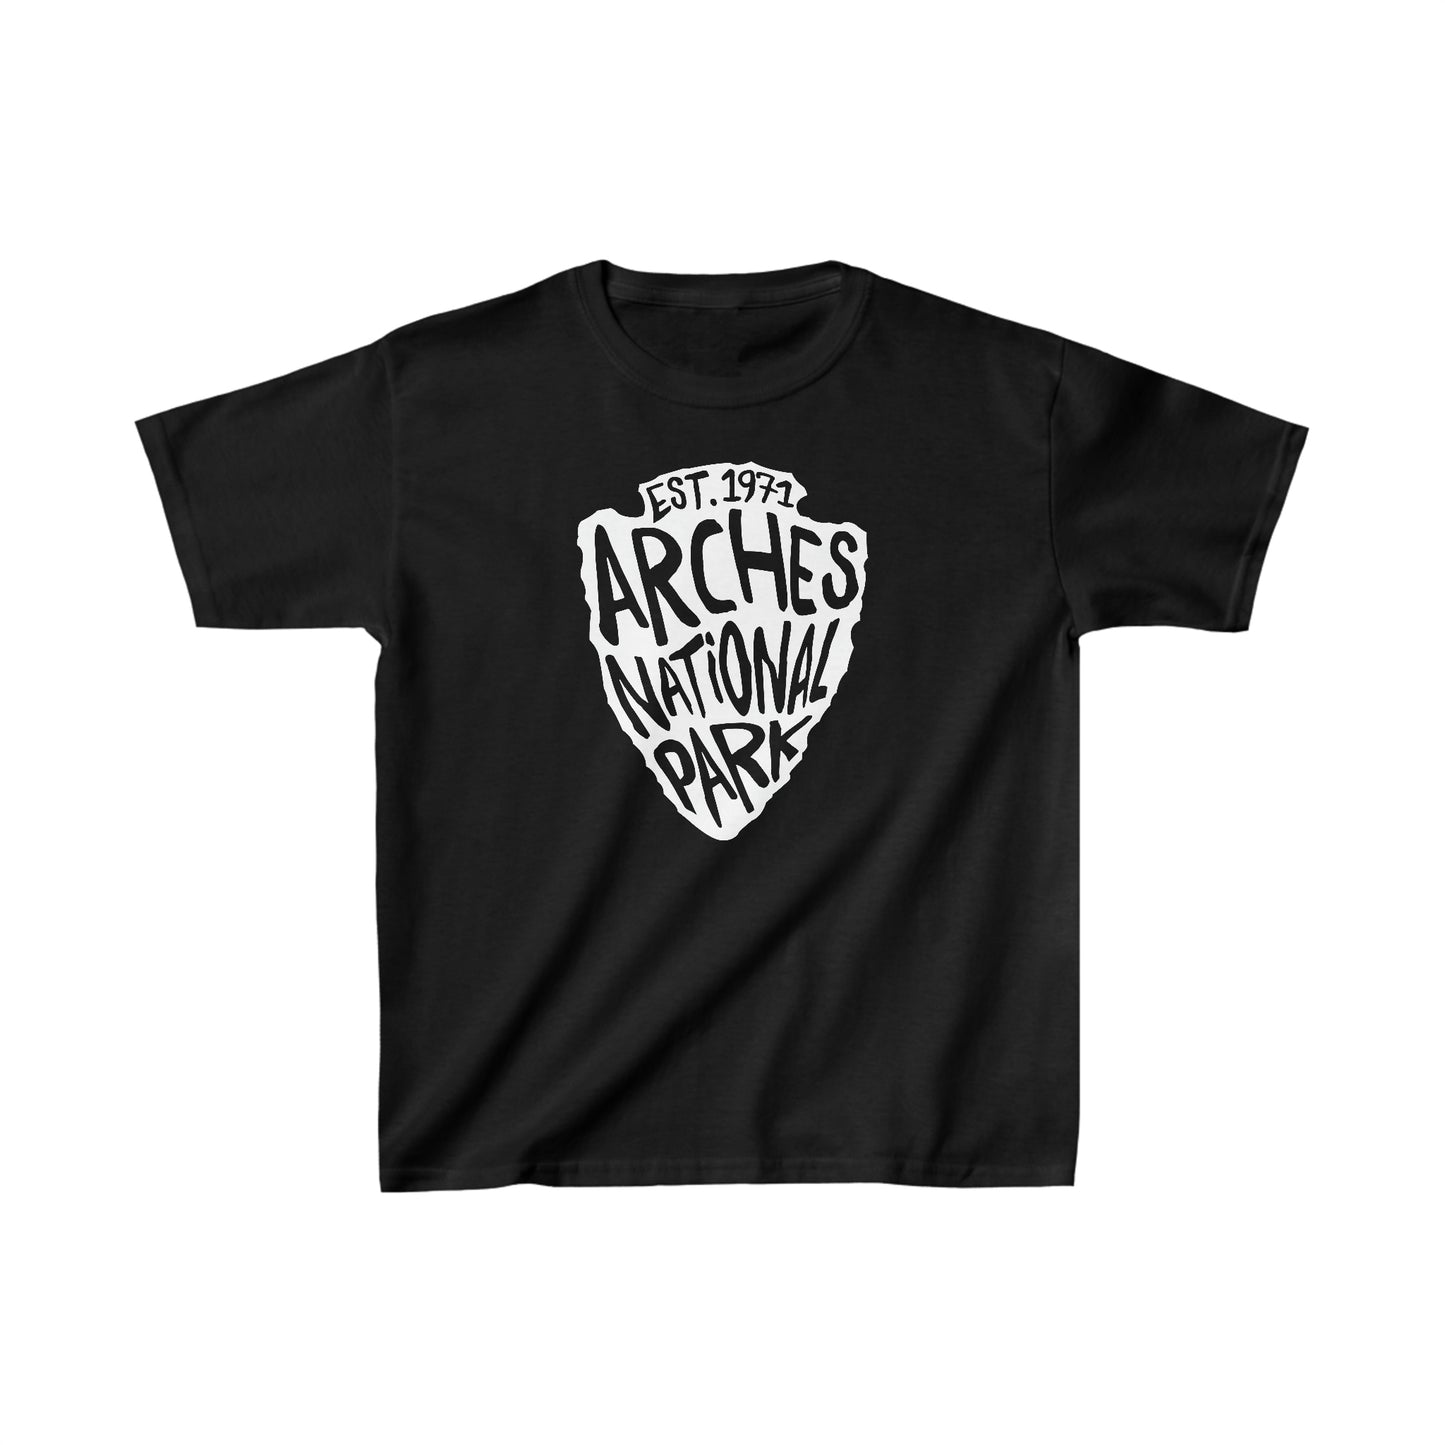 Arches National Park Child T-Shirt - Arrowhead Design